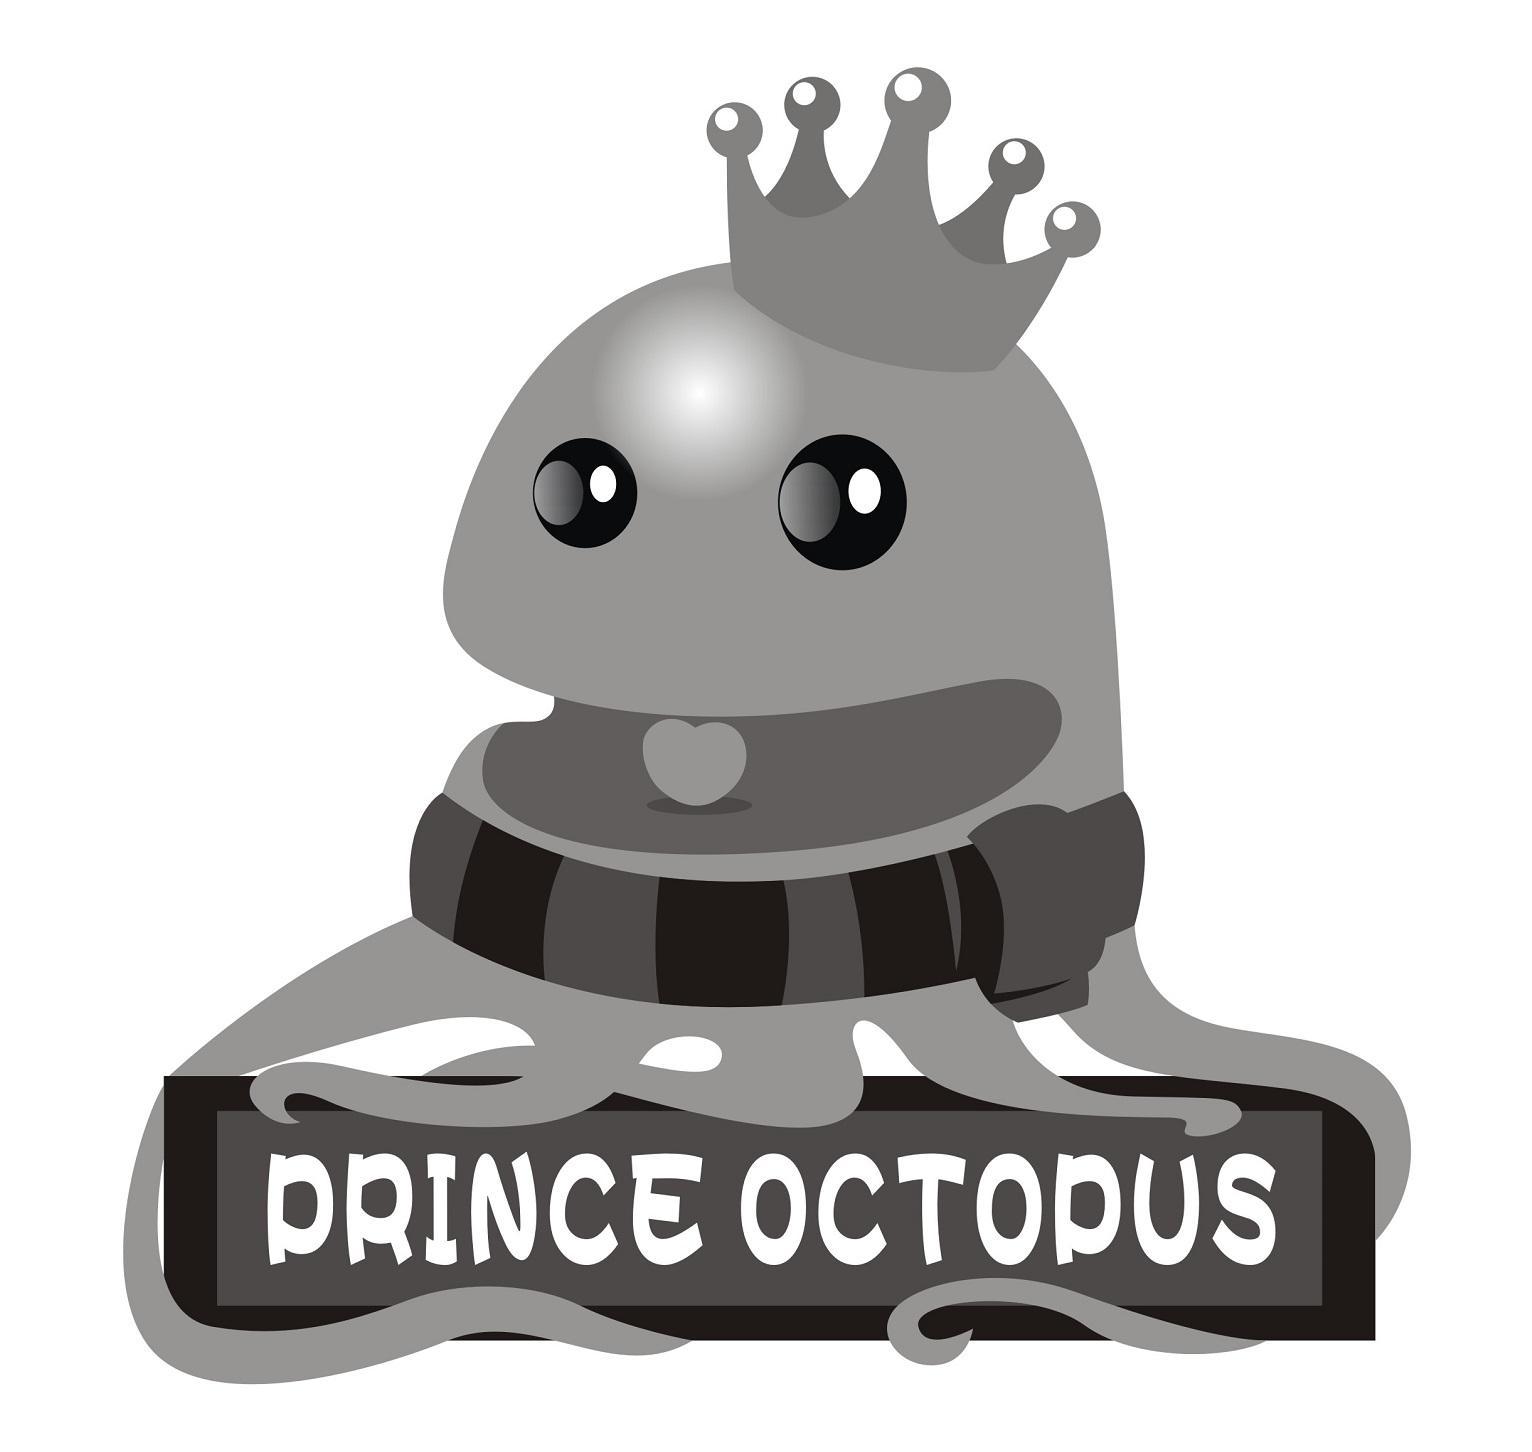 PRINCE OCTOPUS